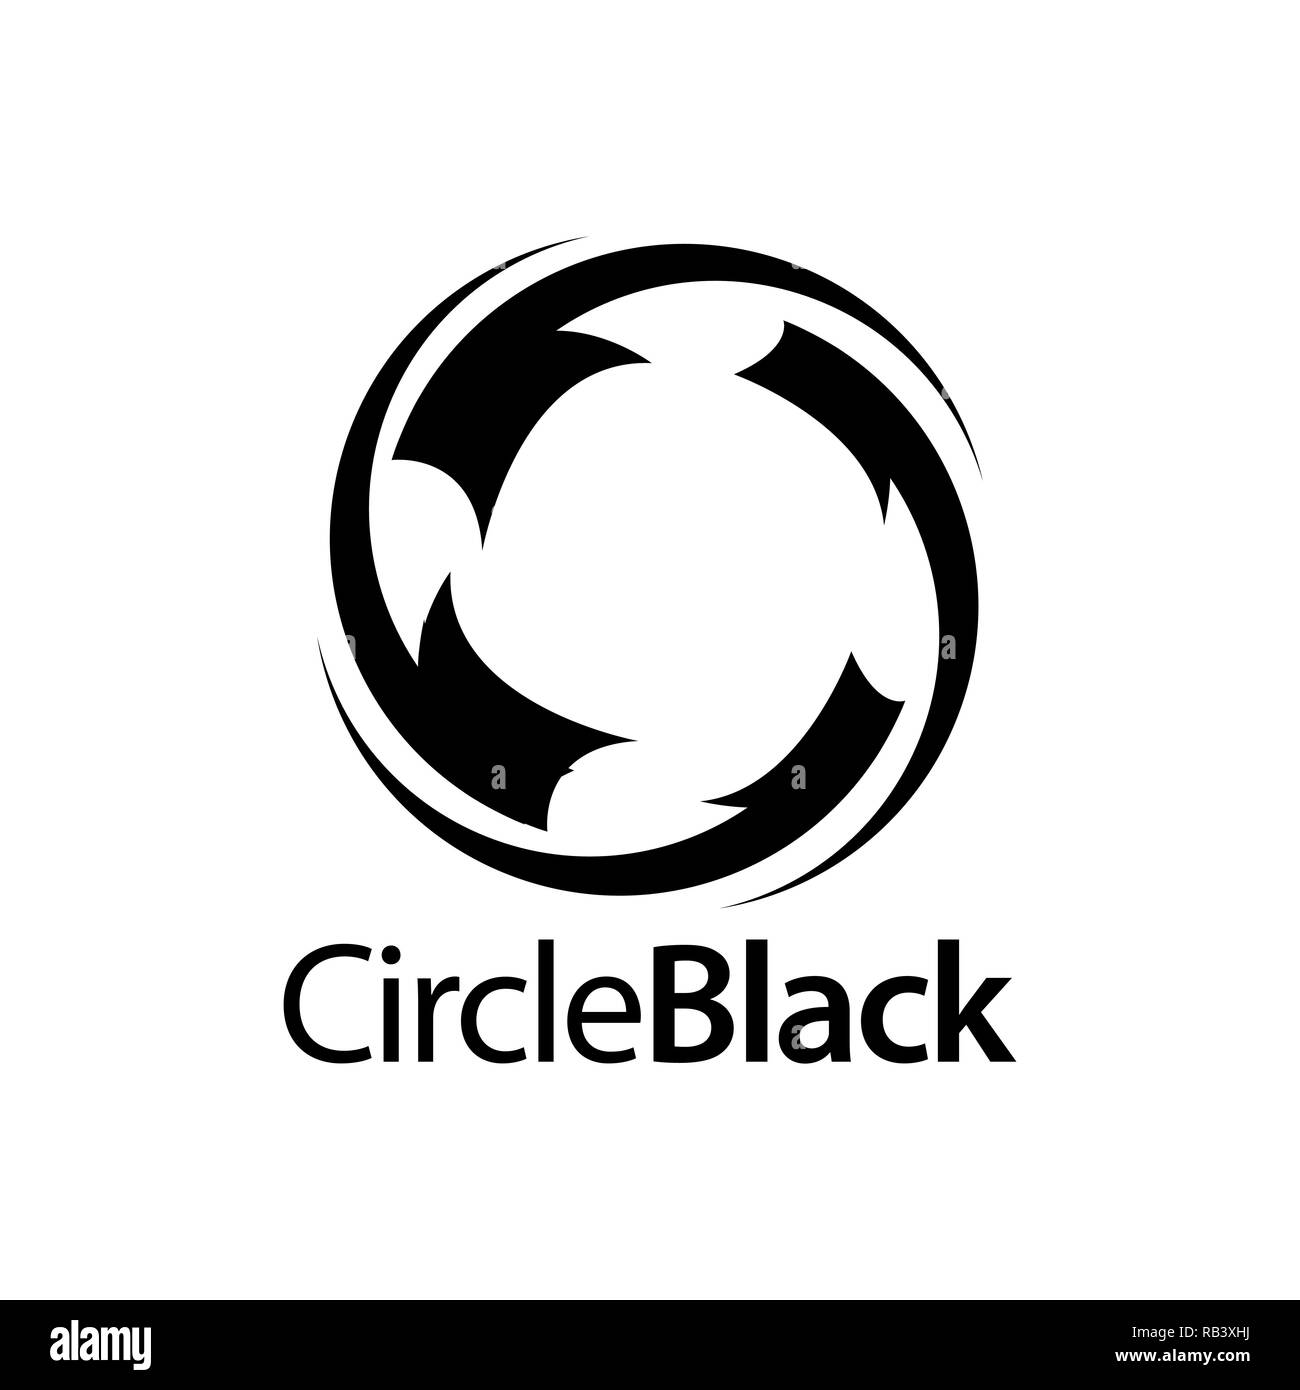 Runde Kohle Kreis schwarz logo Konzept Design vorlage Idee Stock Vektor